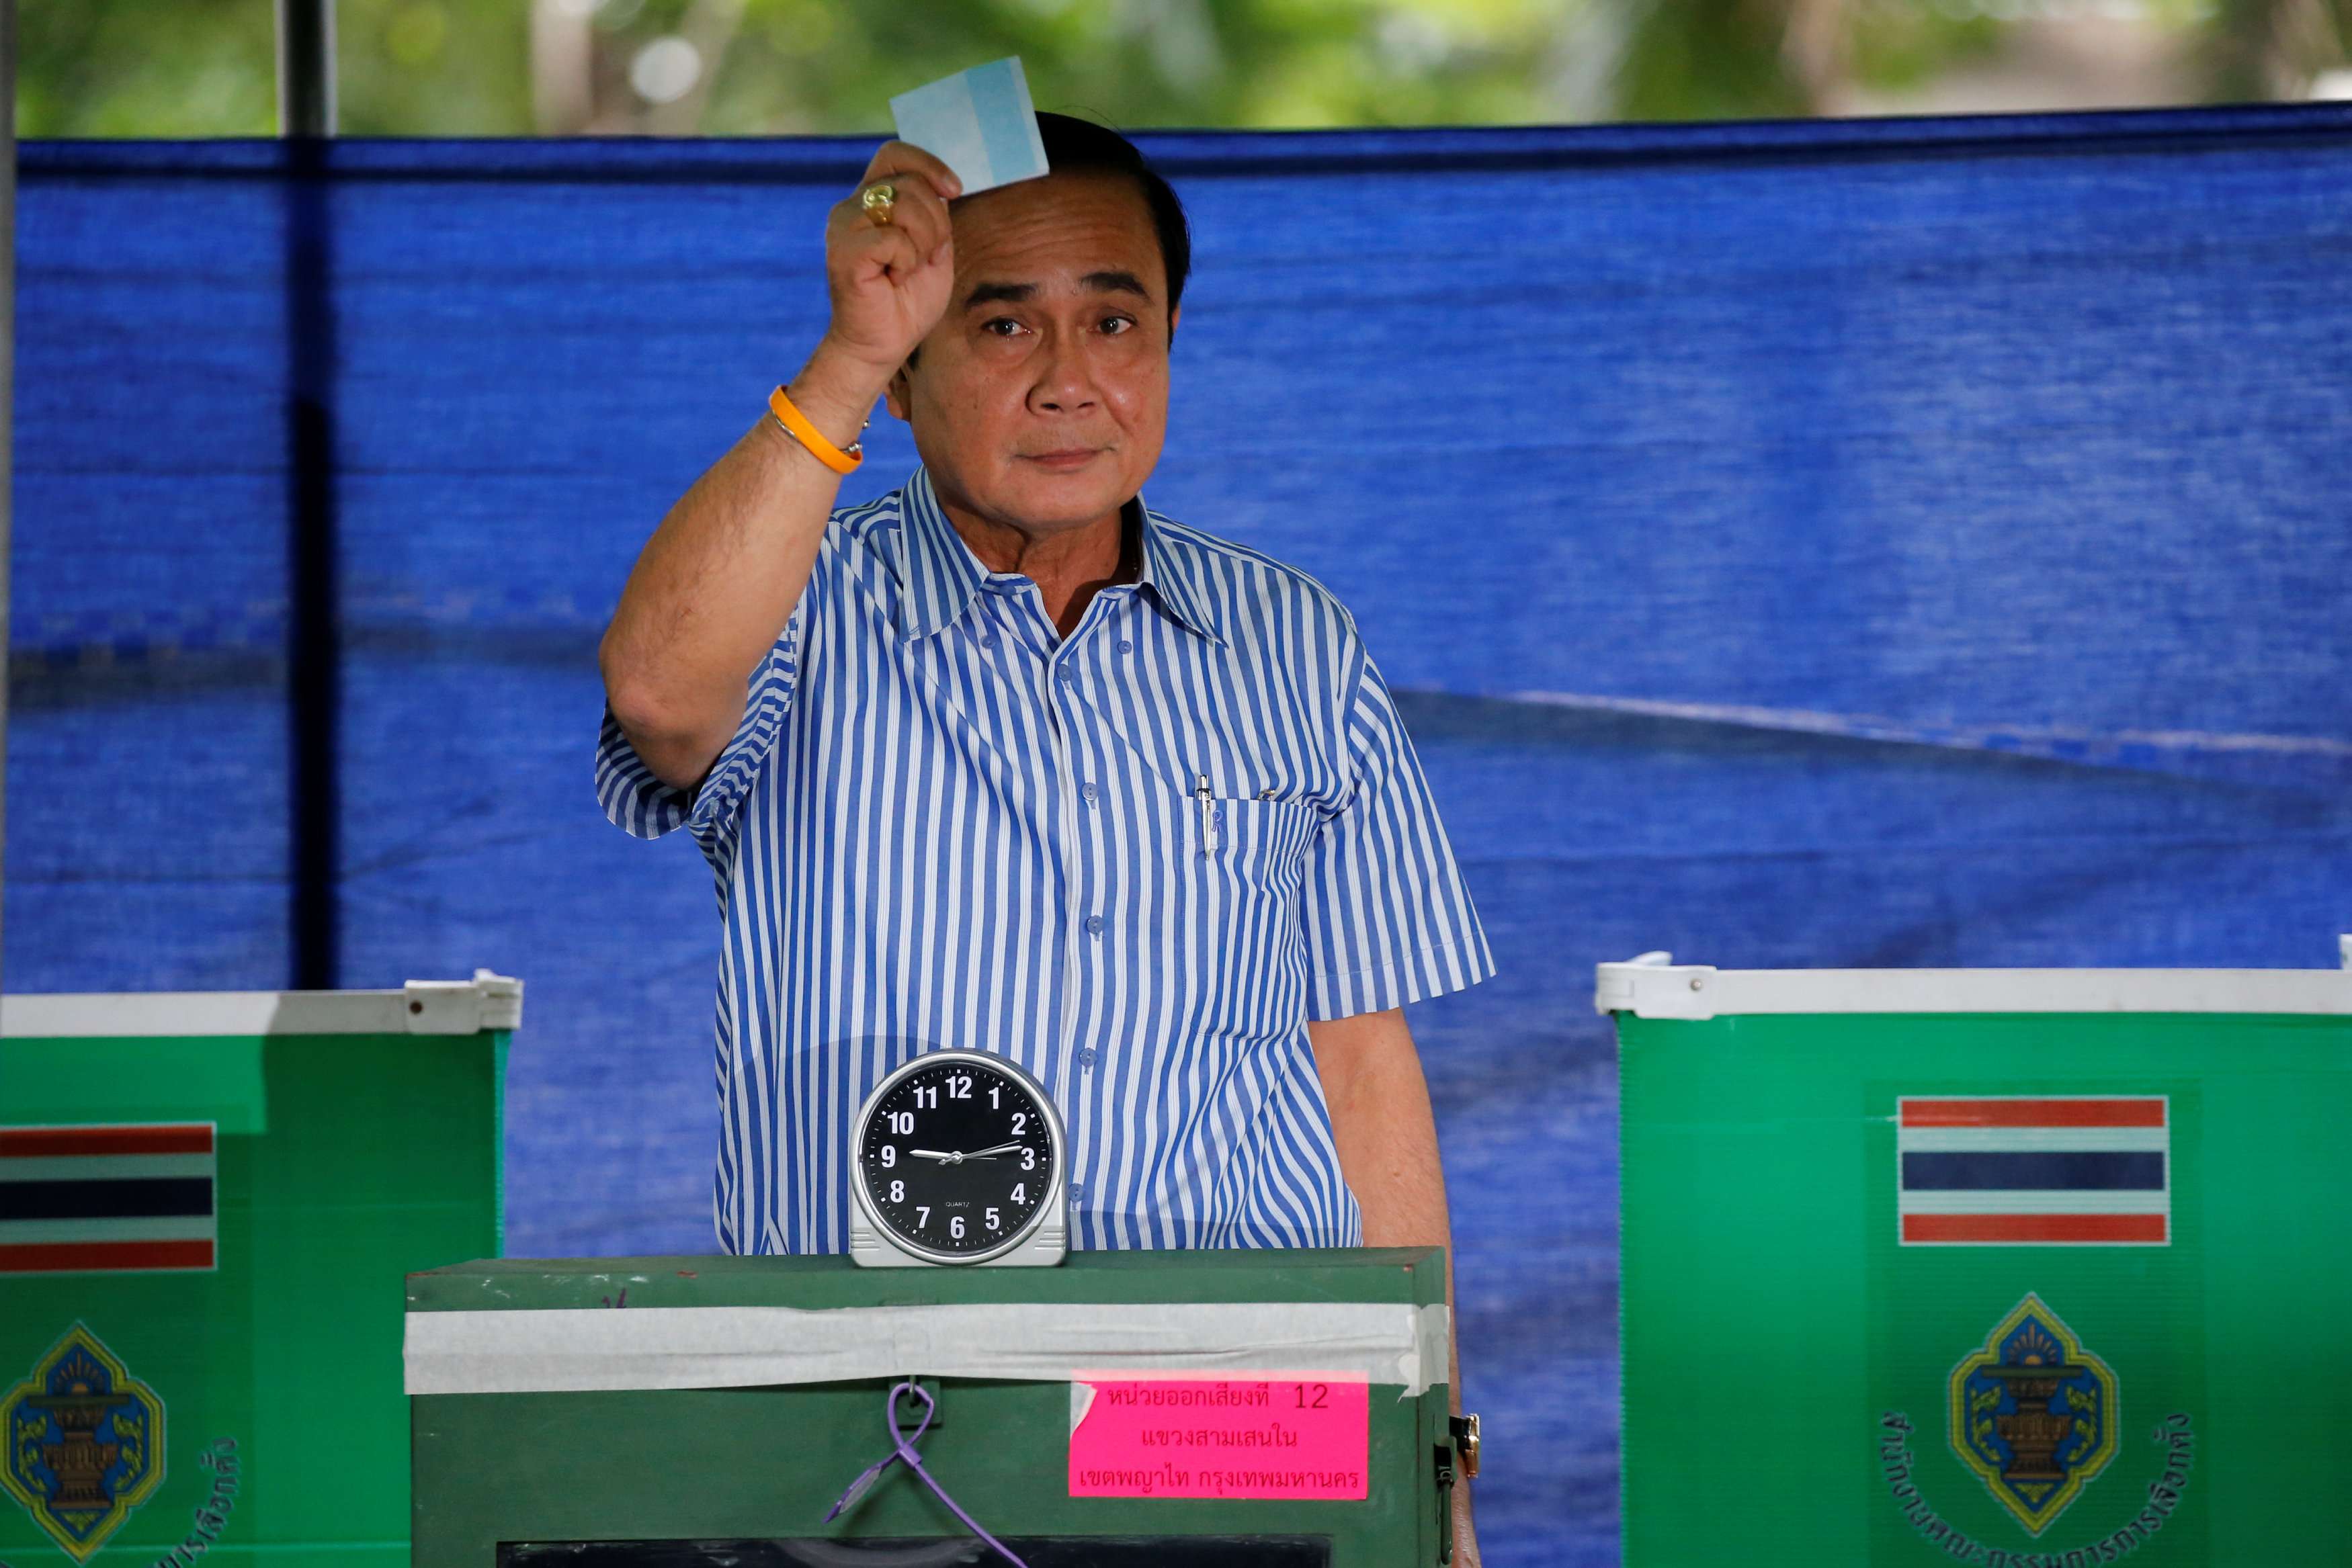 Thai Prime Minister Prayuth Chan-ocha casts his ballot. Photo: Reuters